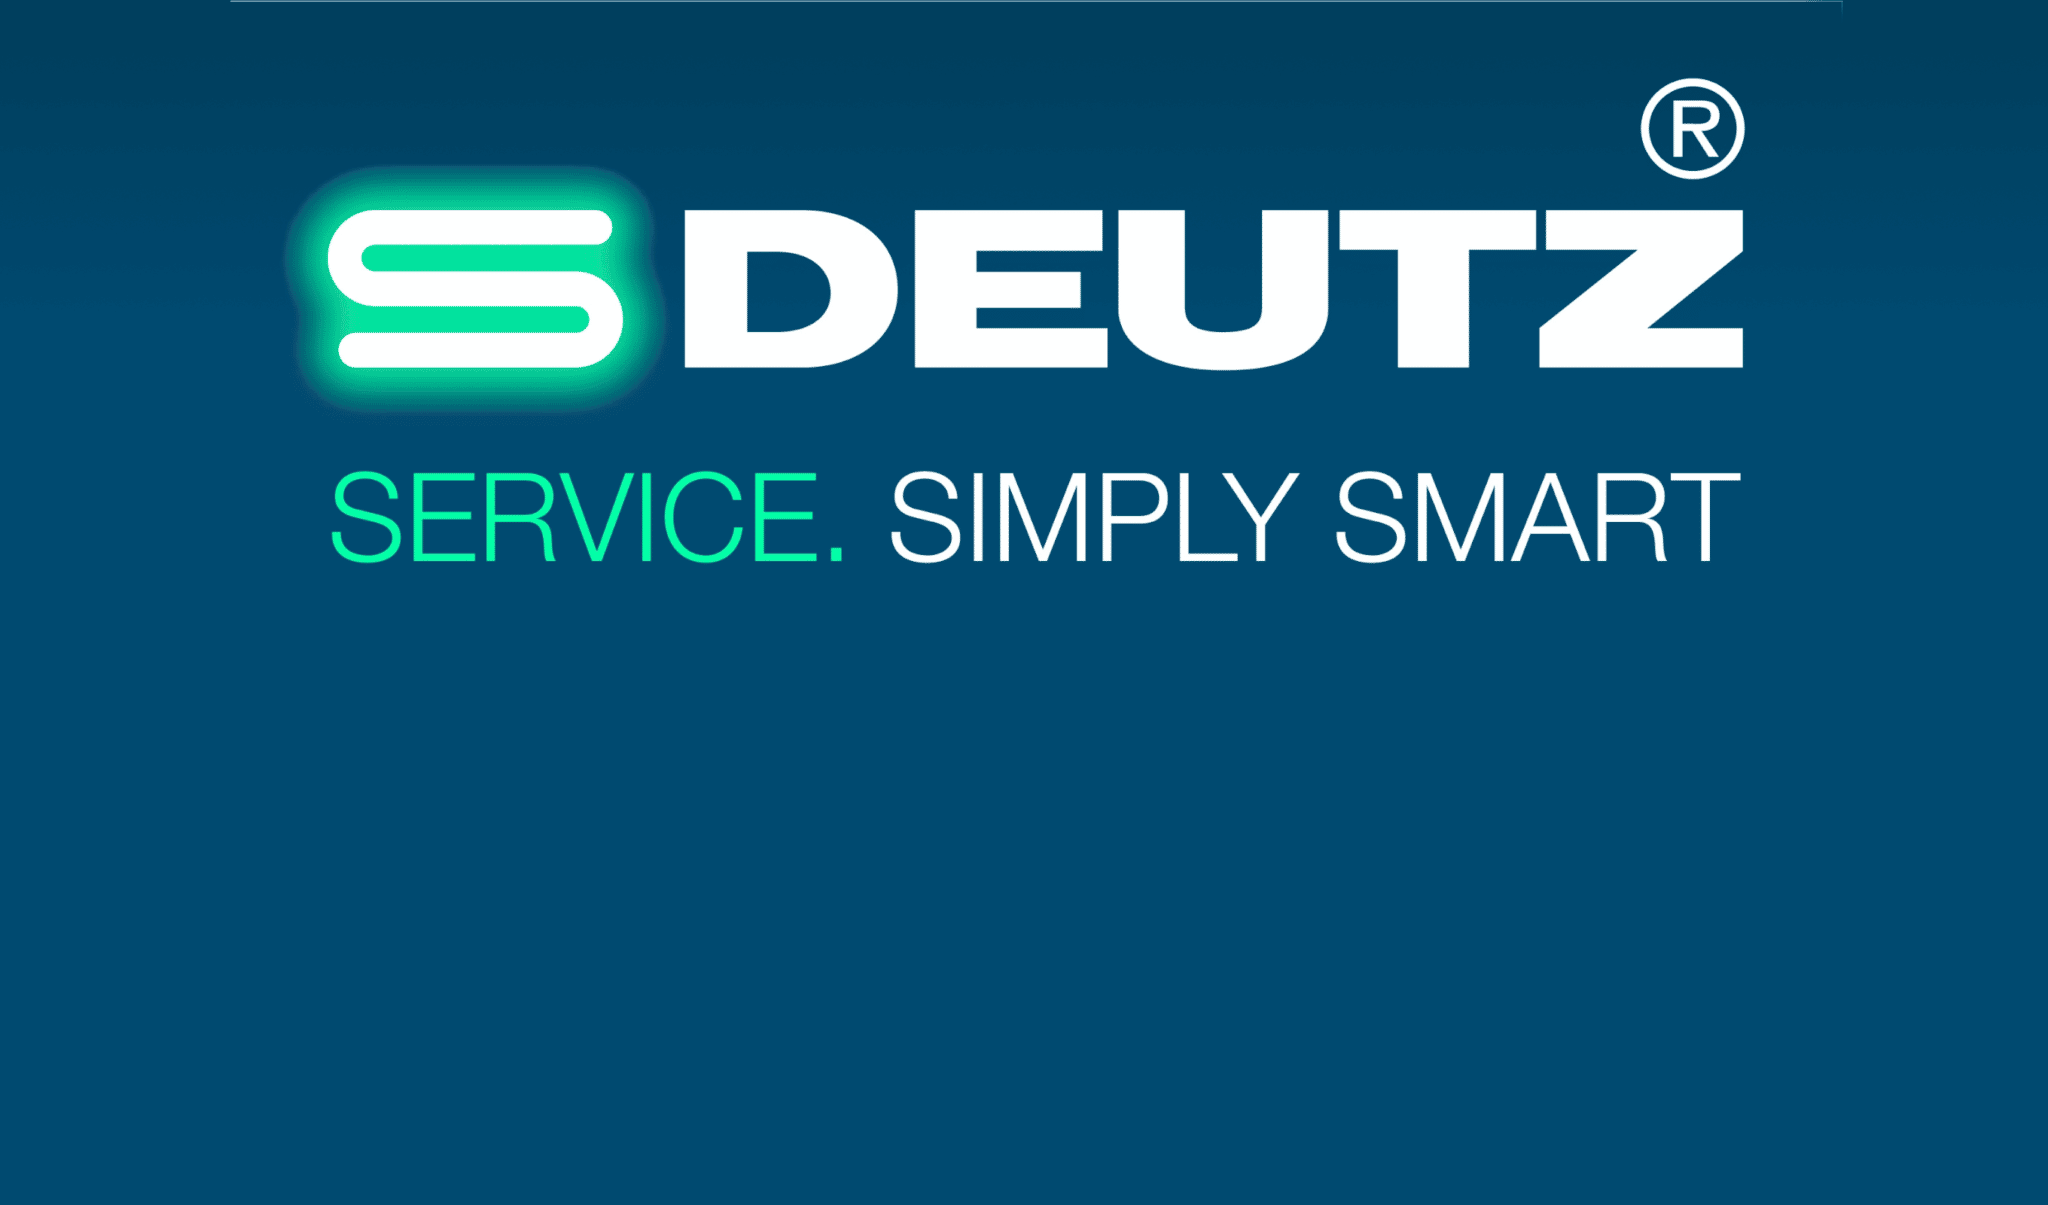 S Deutz Service. Simple Smart